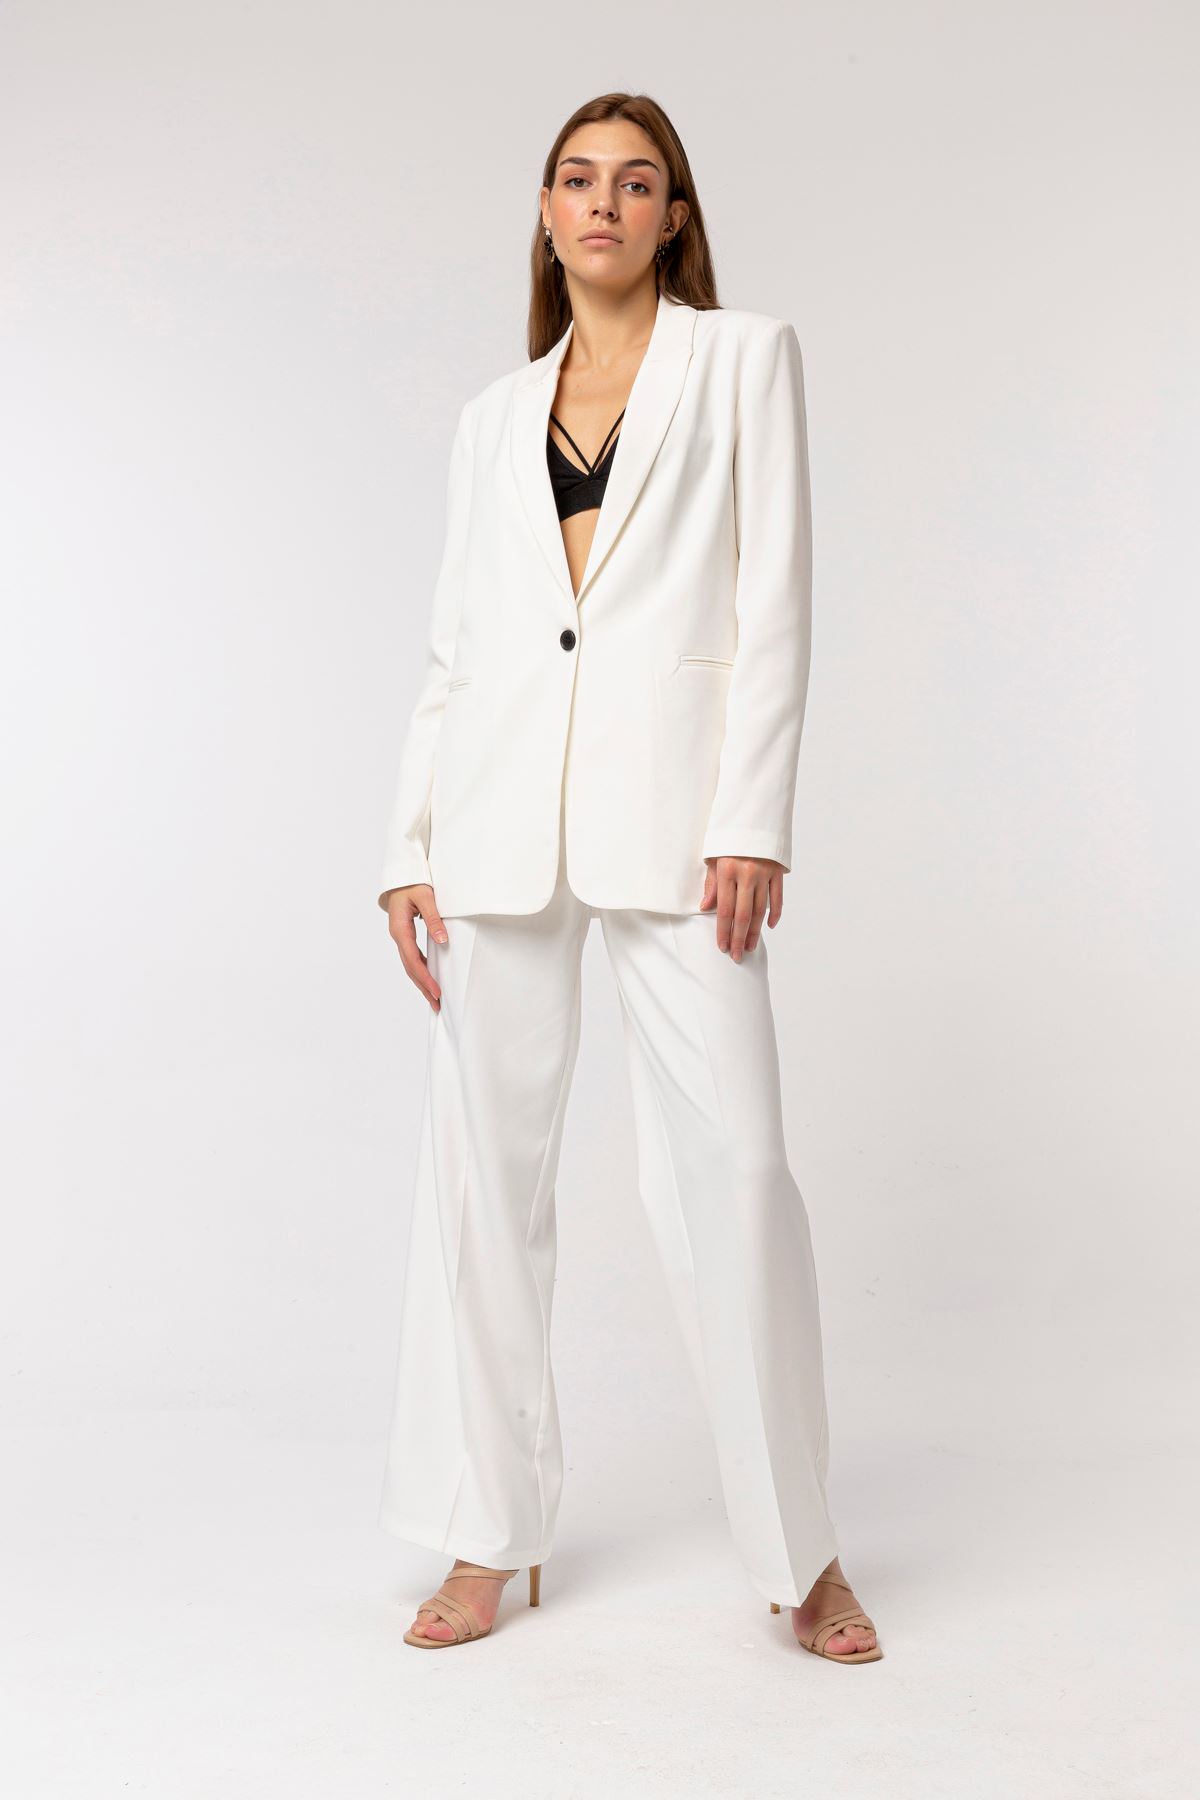 Atlas Fabric Revere Collar Below Hip Classical Single Button Women Jacket - Ecru